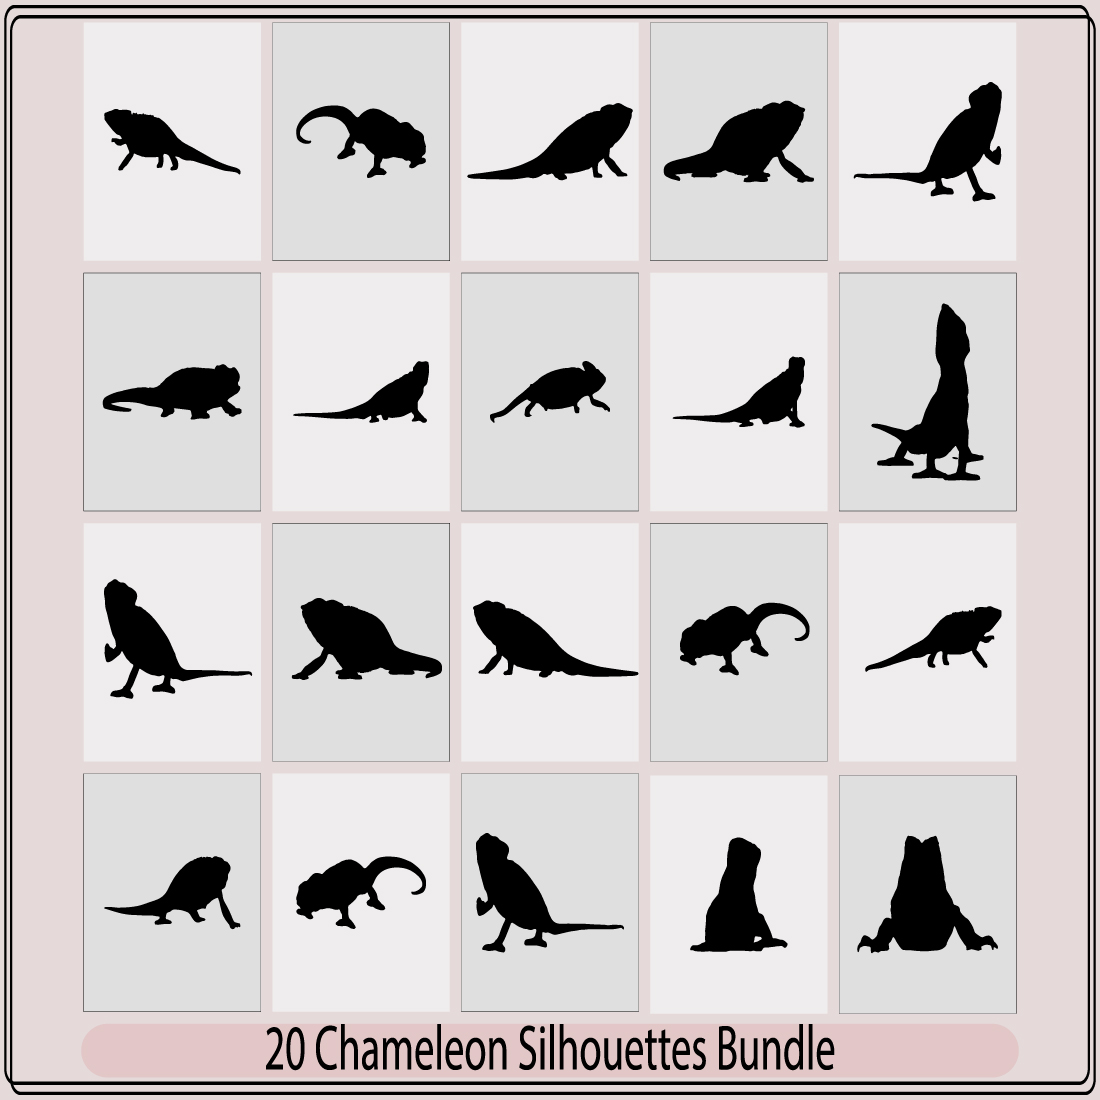 silhouette of a chameleon,Chameleon graphic icon,Chameleon lizard reptile black silhouette,Vector illustration of a chameleon silhouette, preview image.